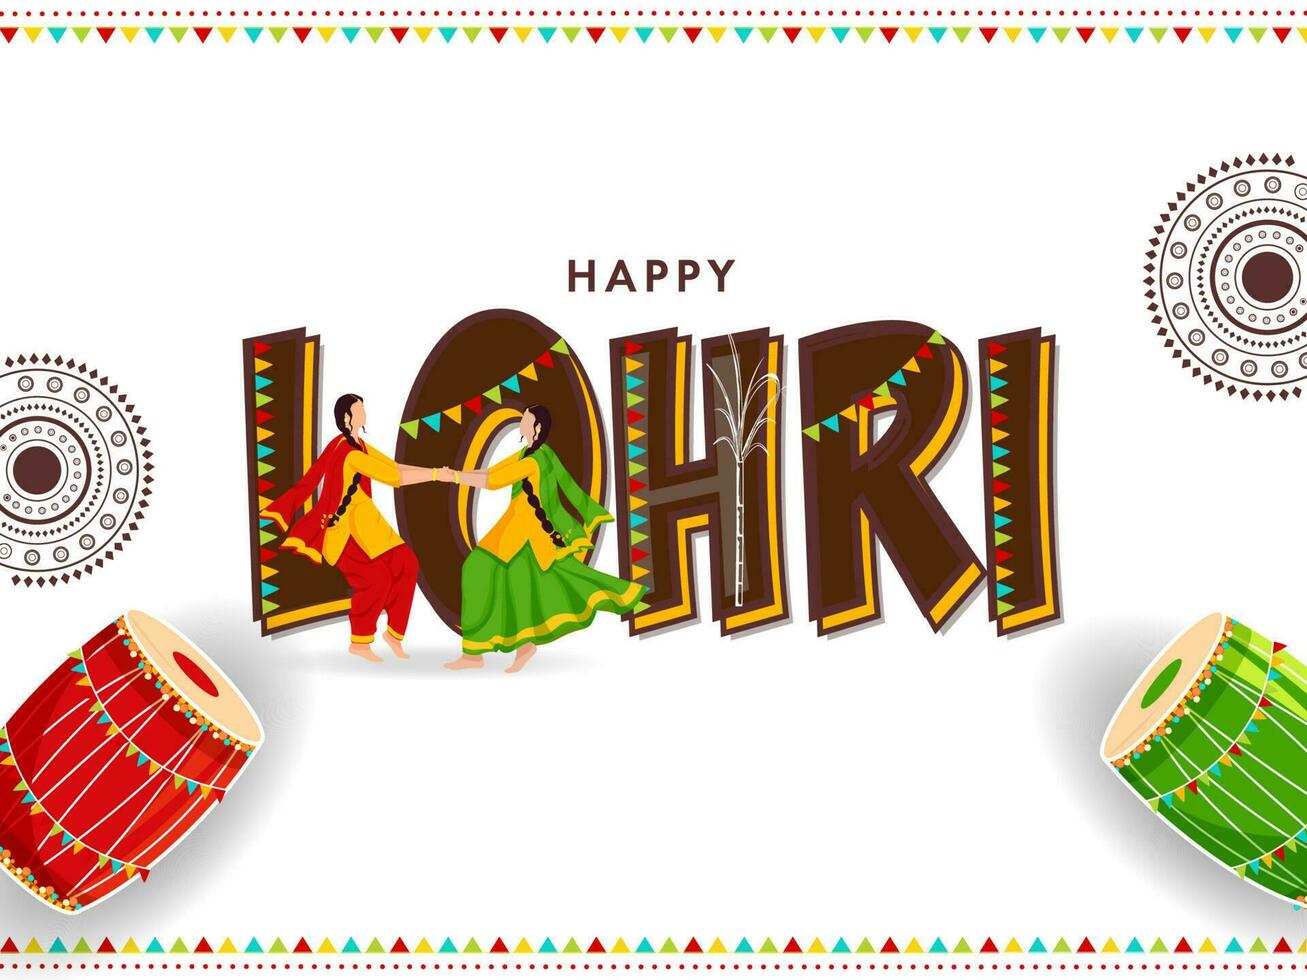 gelukkig lohri poster ontwerp met Punjabi jong Dames aan het doen giddha dans, dhol instrumenten en lineair mandala patroon Aan wit achtergrond. vector